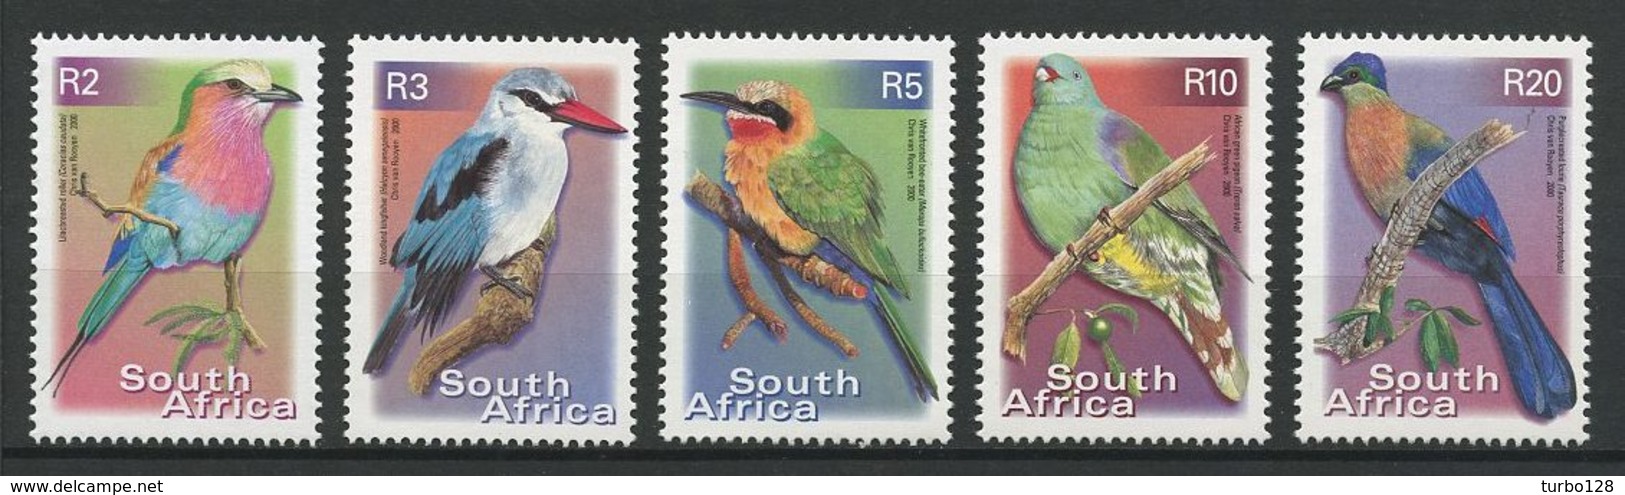 Afrique Sud 2000 N° 1127V/1127Z ** Neufs MNH Superbes C 27 € Faune Oiseaux Halcyon Birds Fauna Animaux - Ongebruikt